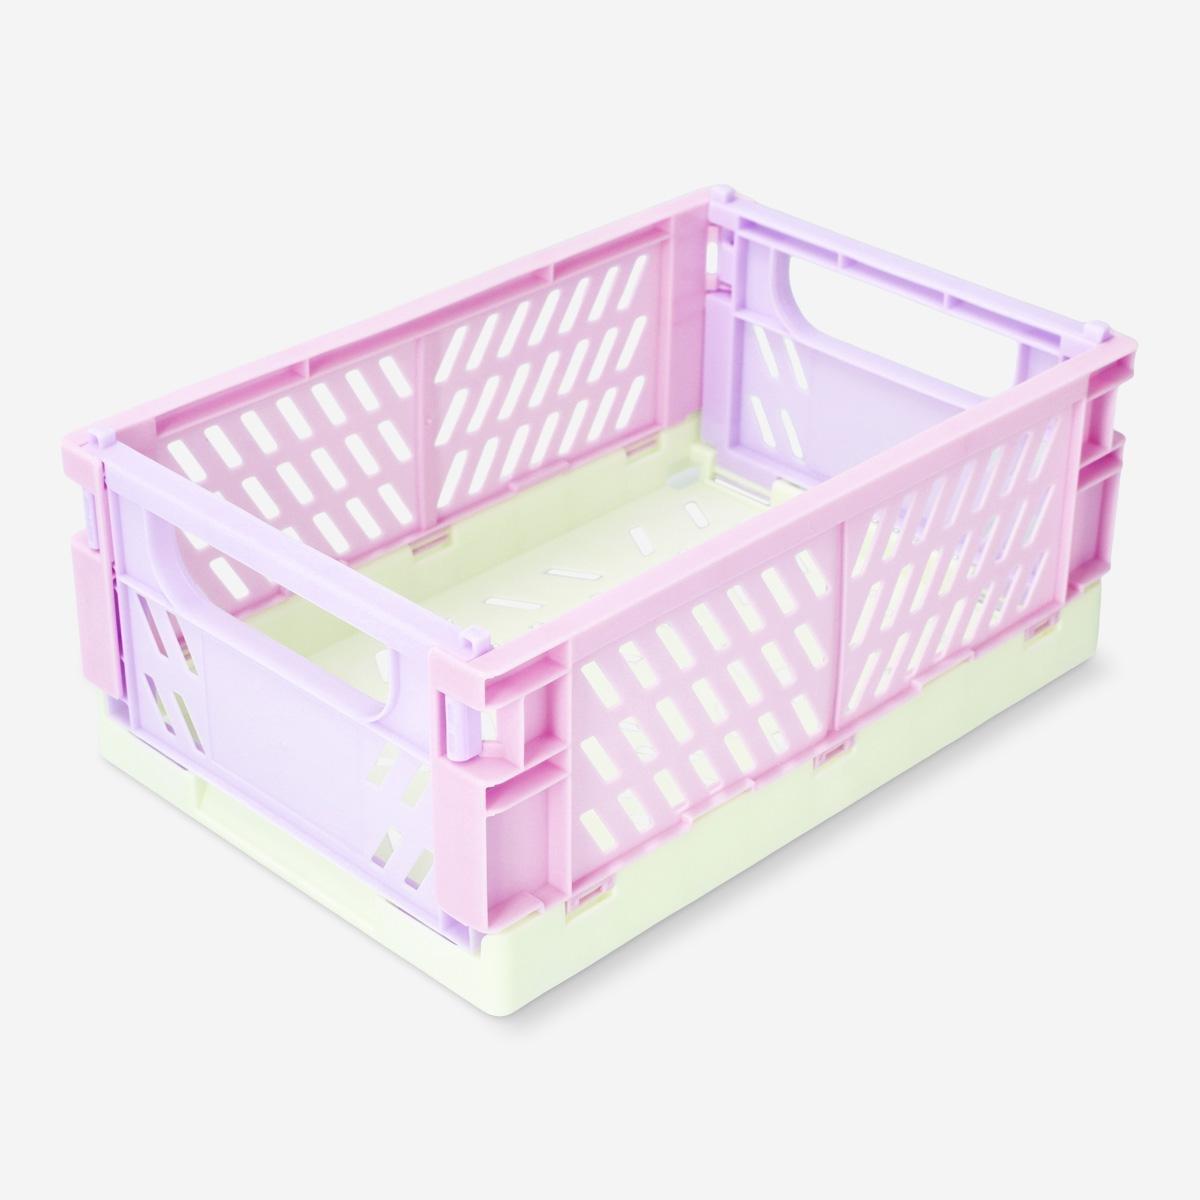 Pink collapsible storage box. Large